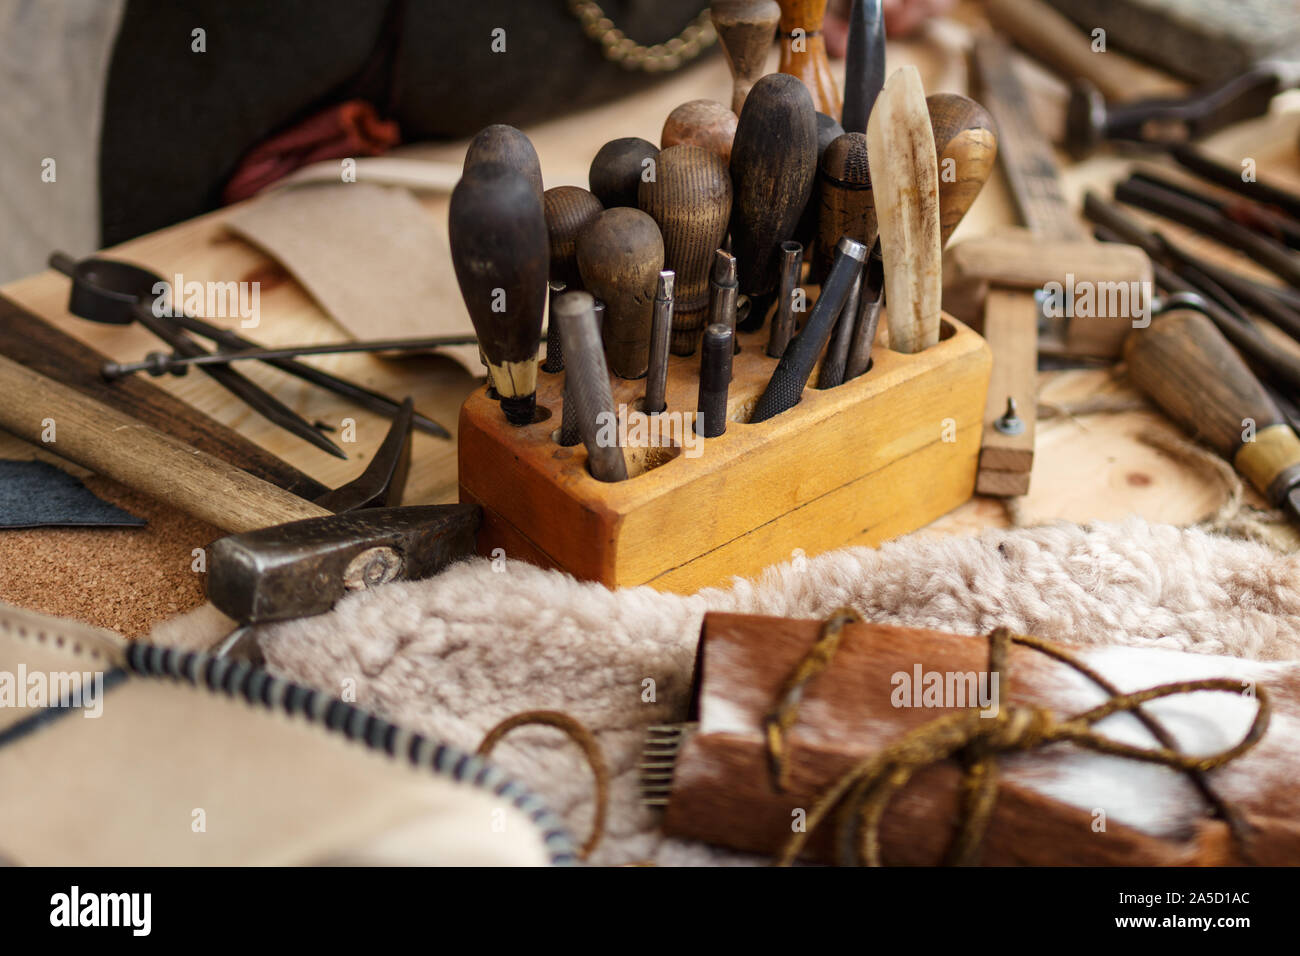 Leathercraft tools Stock Photo by ©karnauhov 79178240